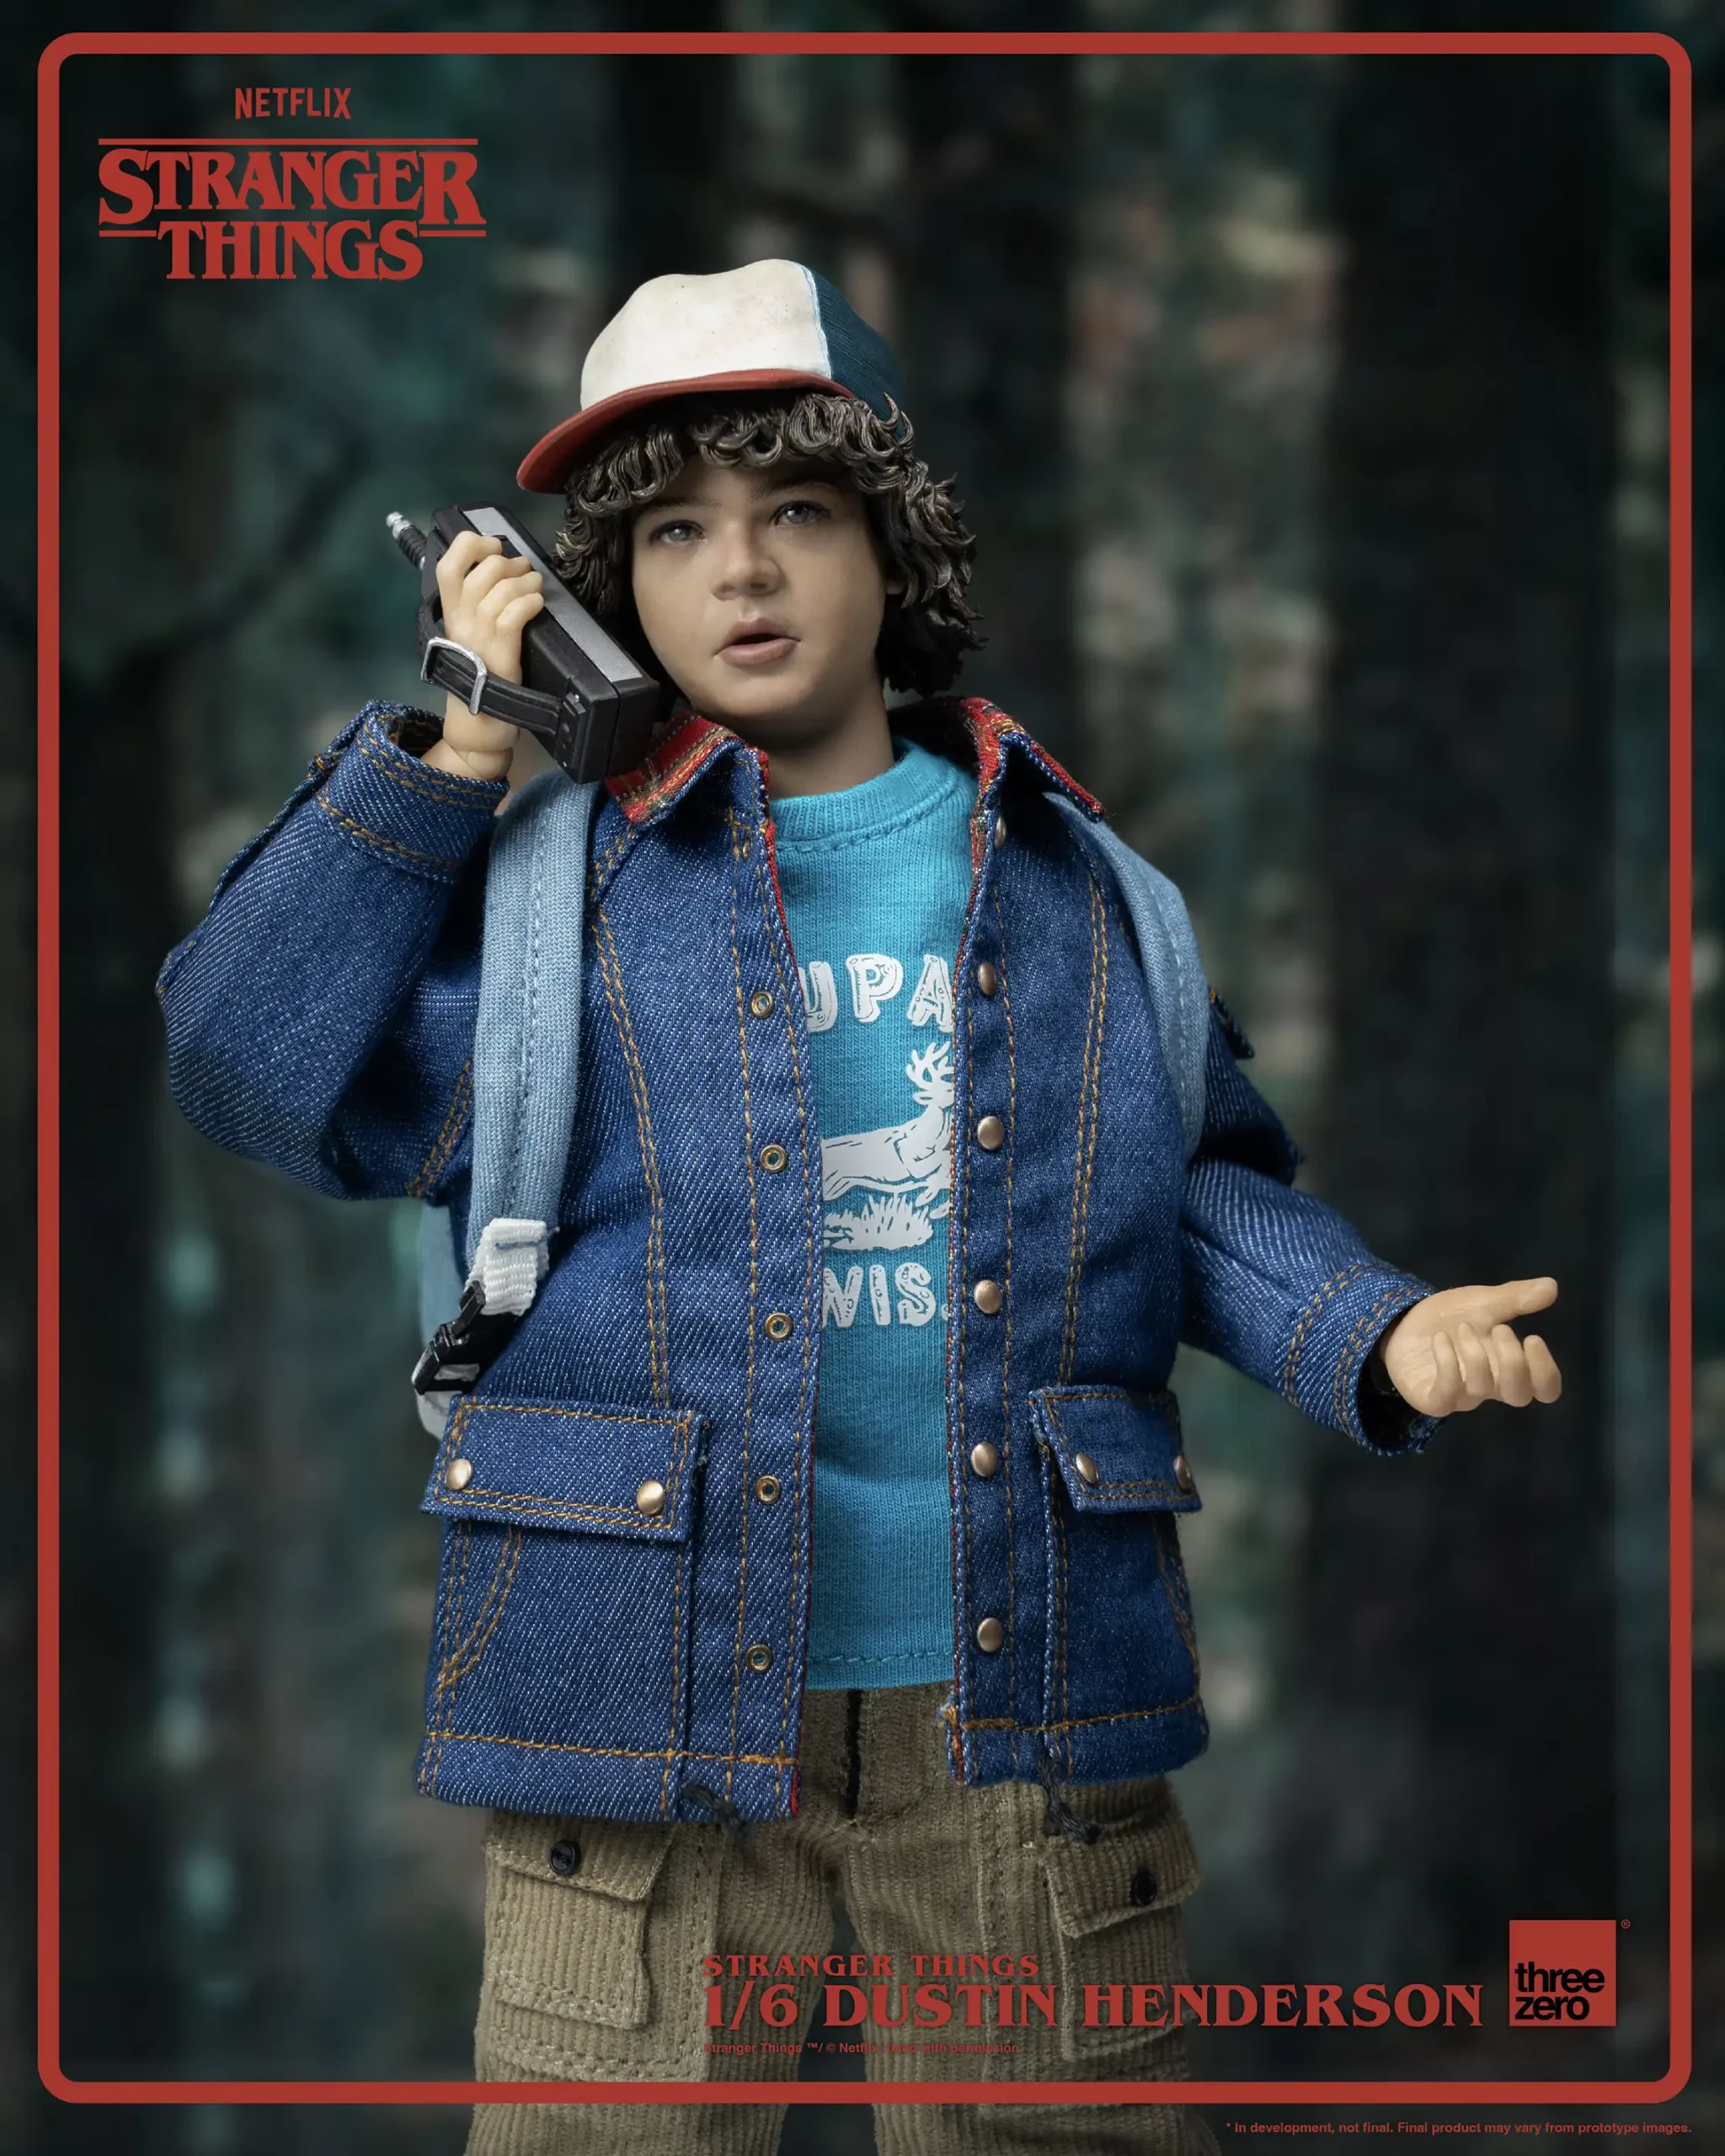 Stranger Things1/6 Dustin Henderson – threezero store